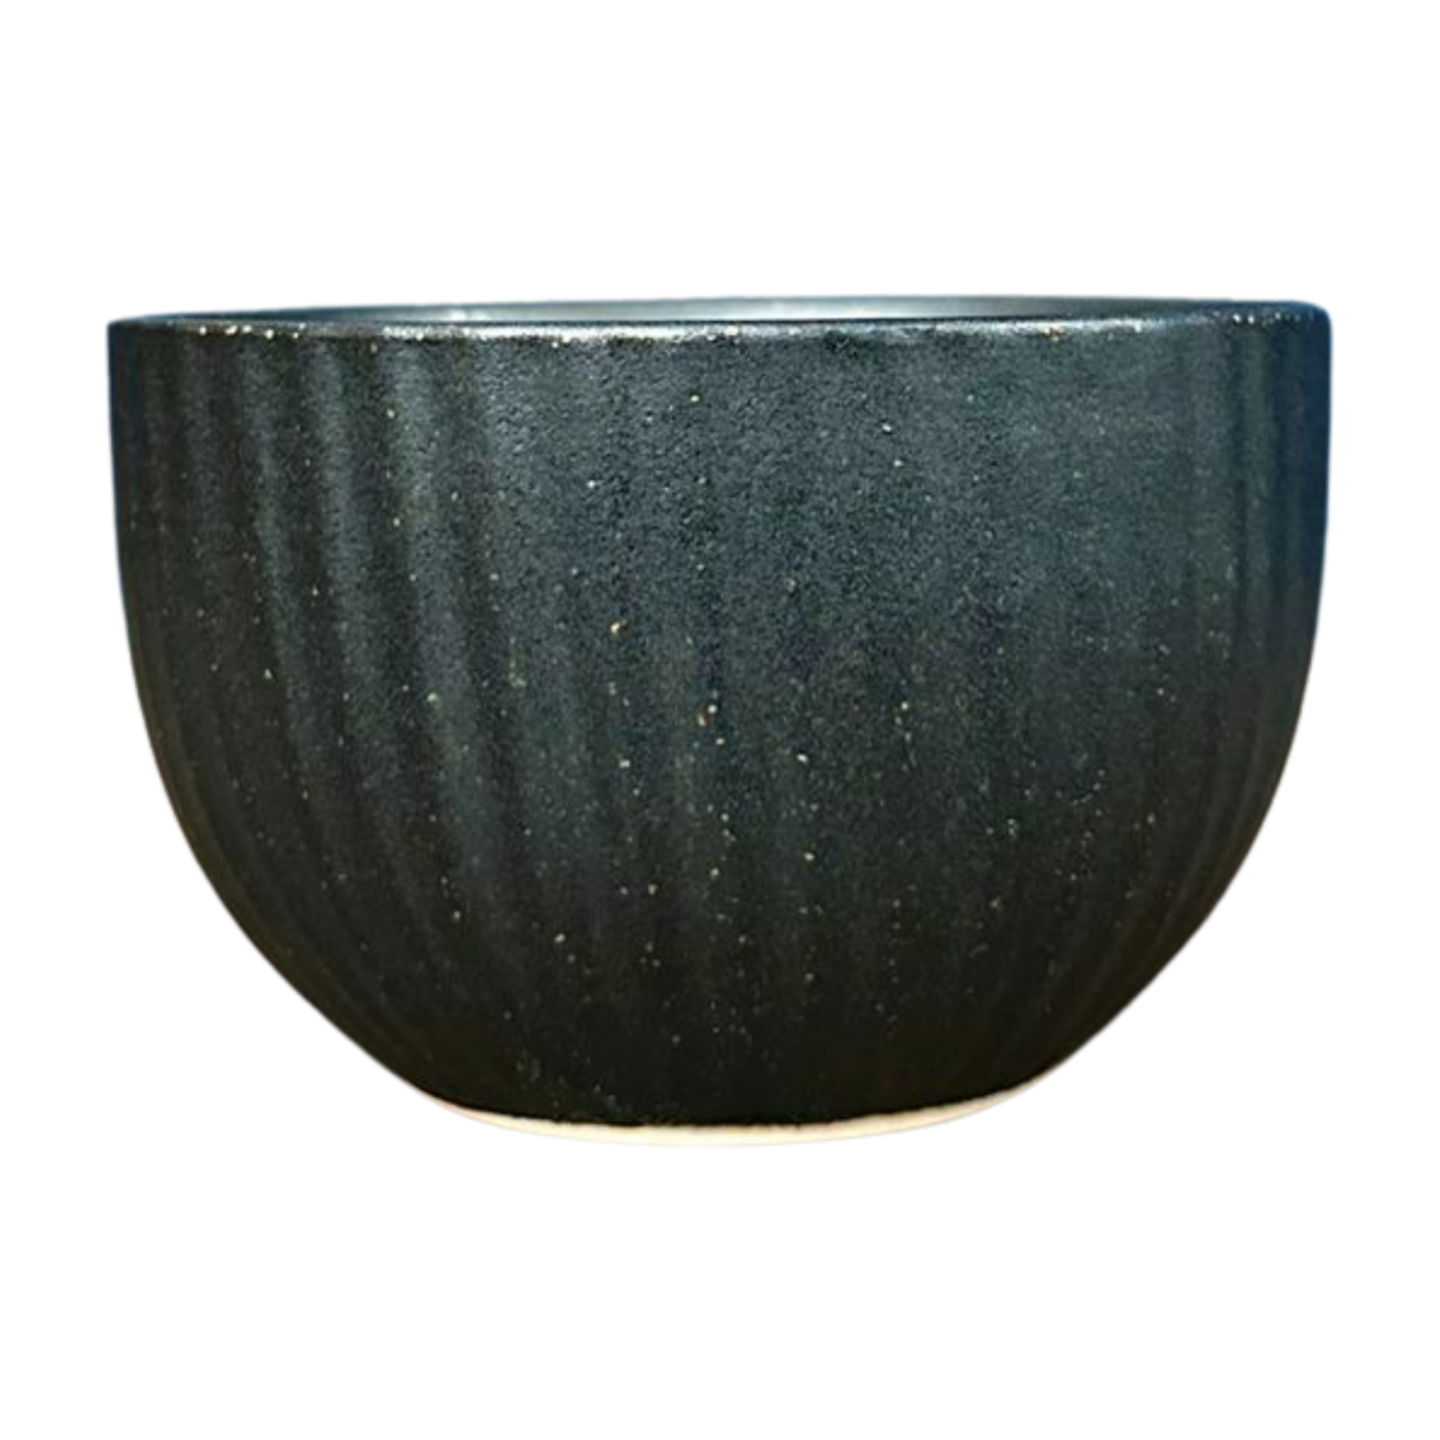 Japanese Rice Bowl in Black